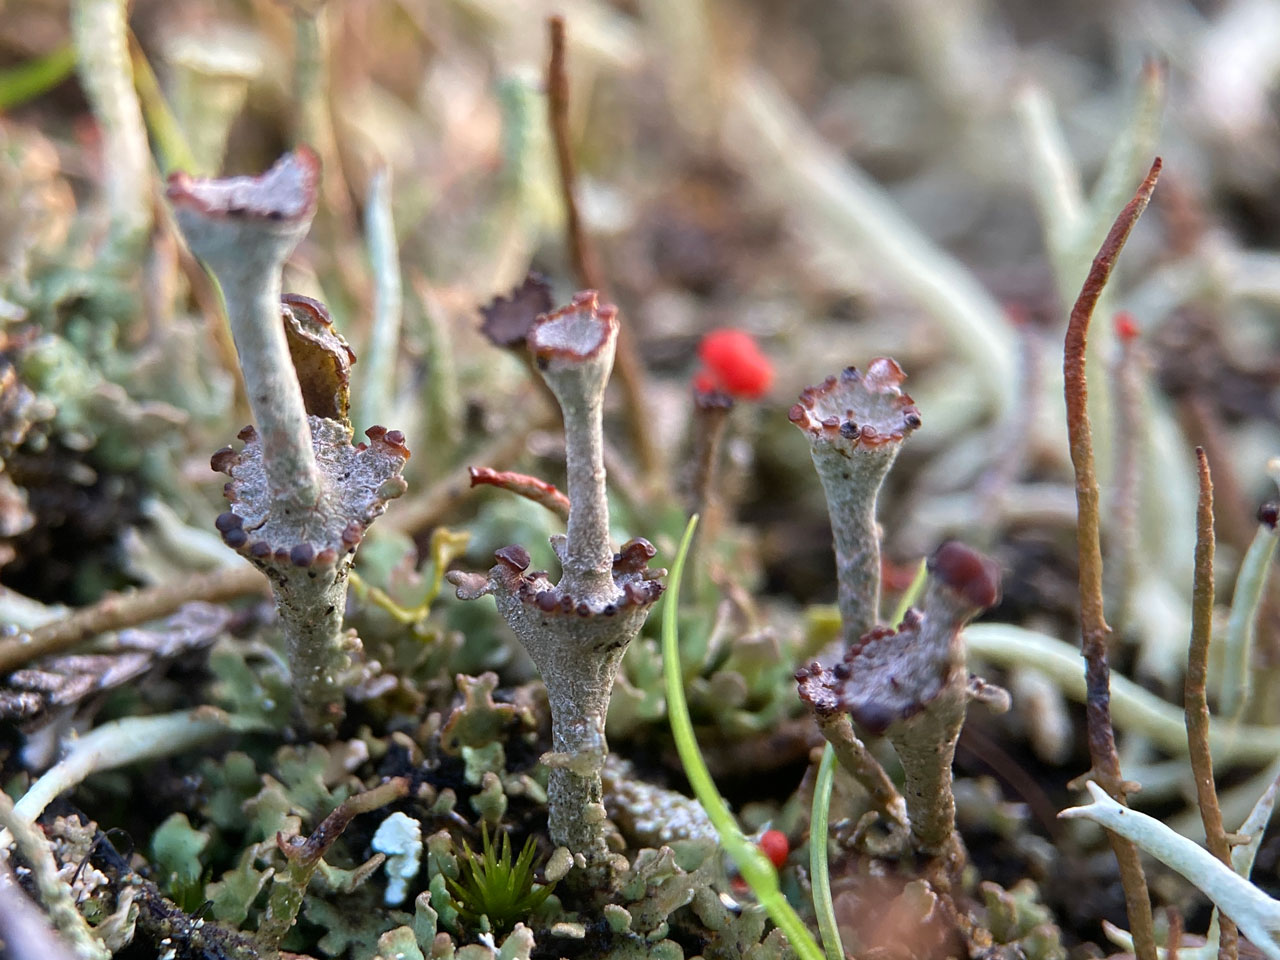 Cladonia pulvinata, podetia, Fritham Plain, New Forest